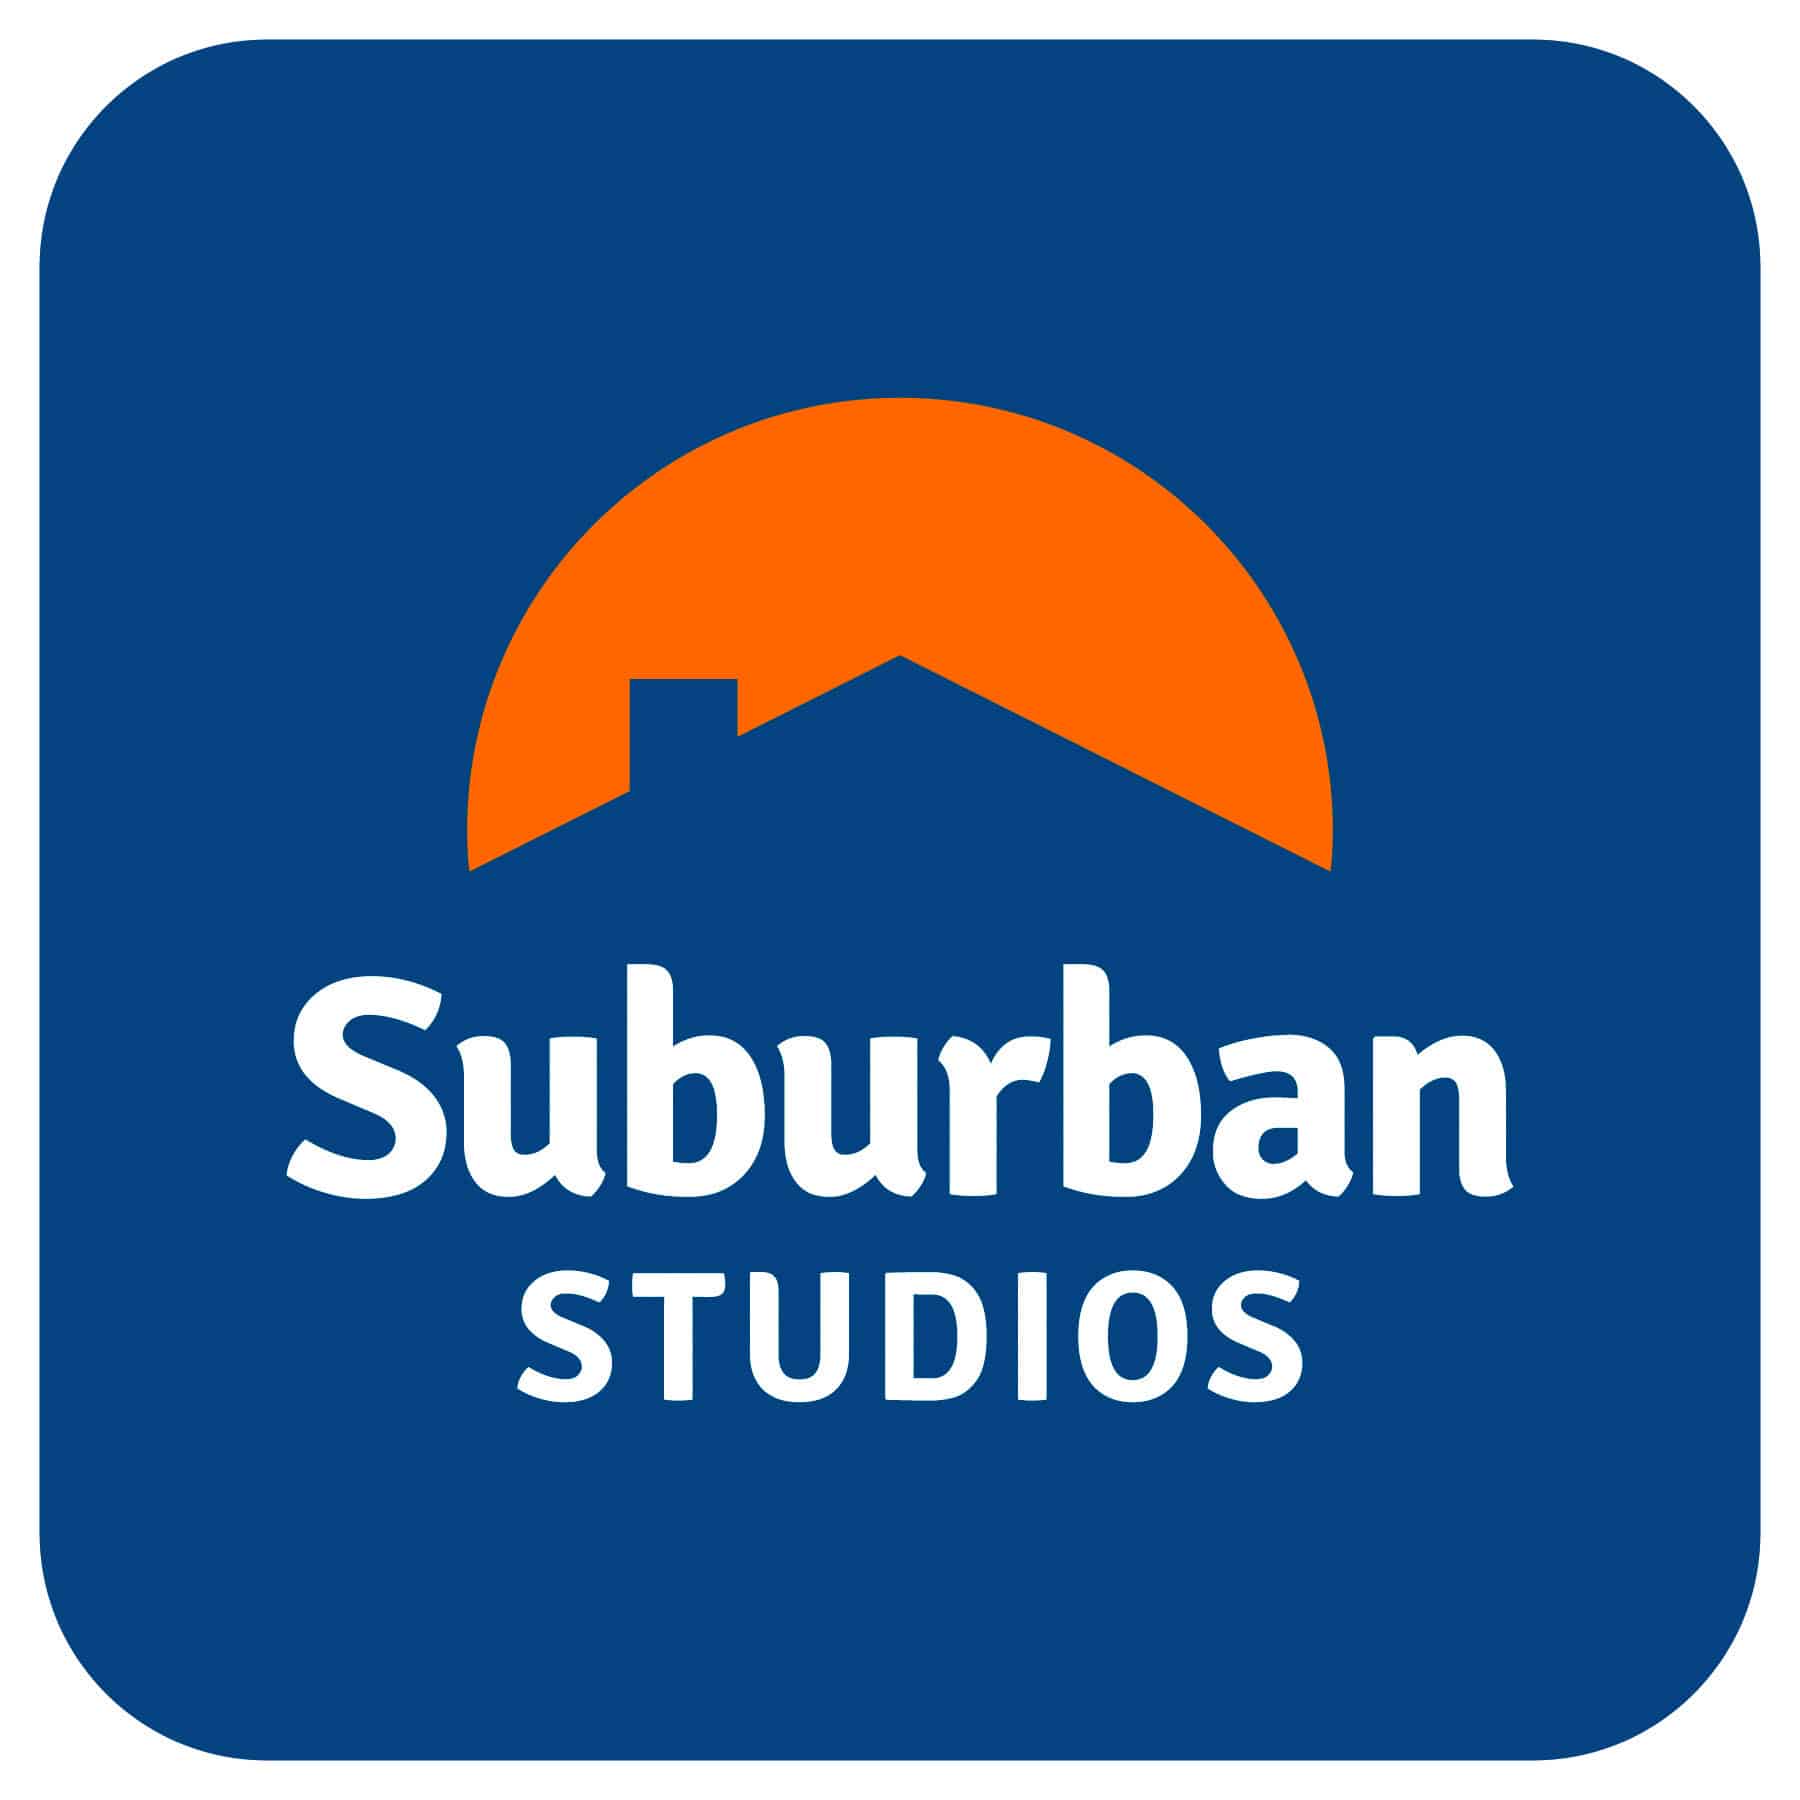 Suburban Studio in Cookeville, TN